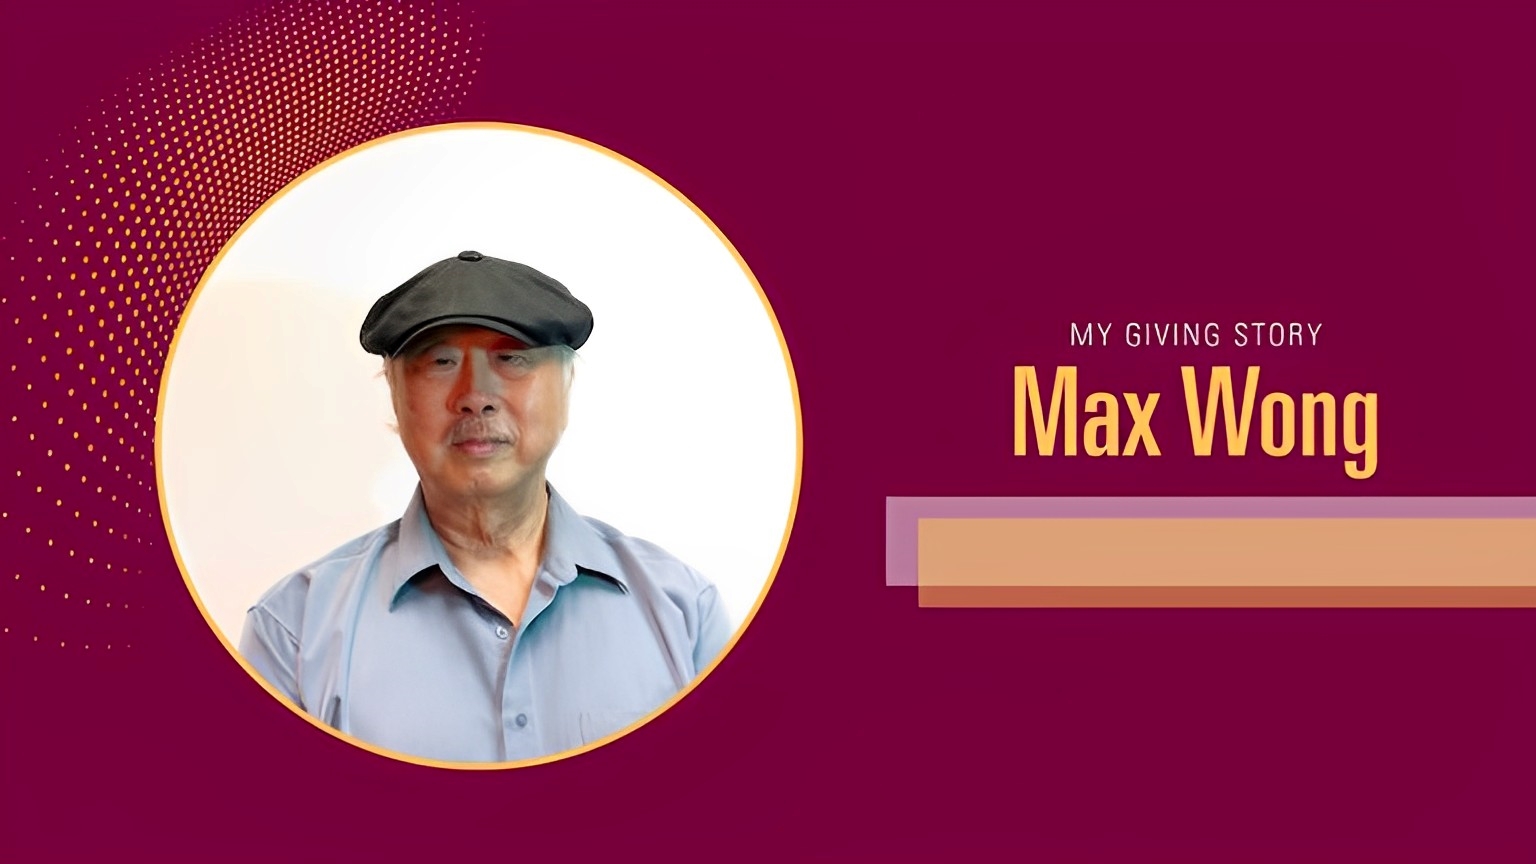 Max Wong - my giving story